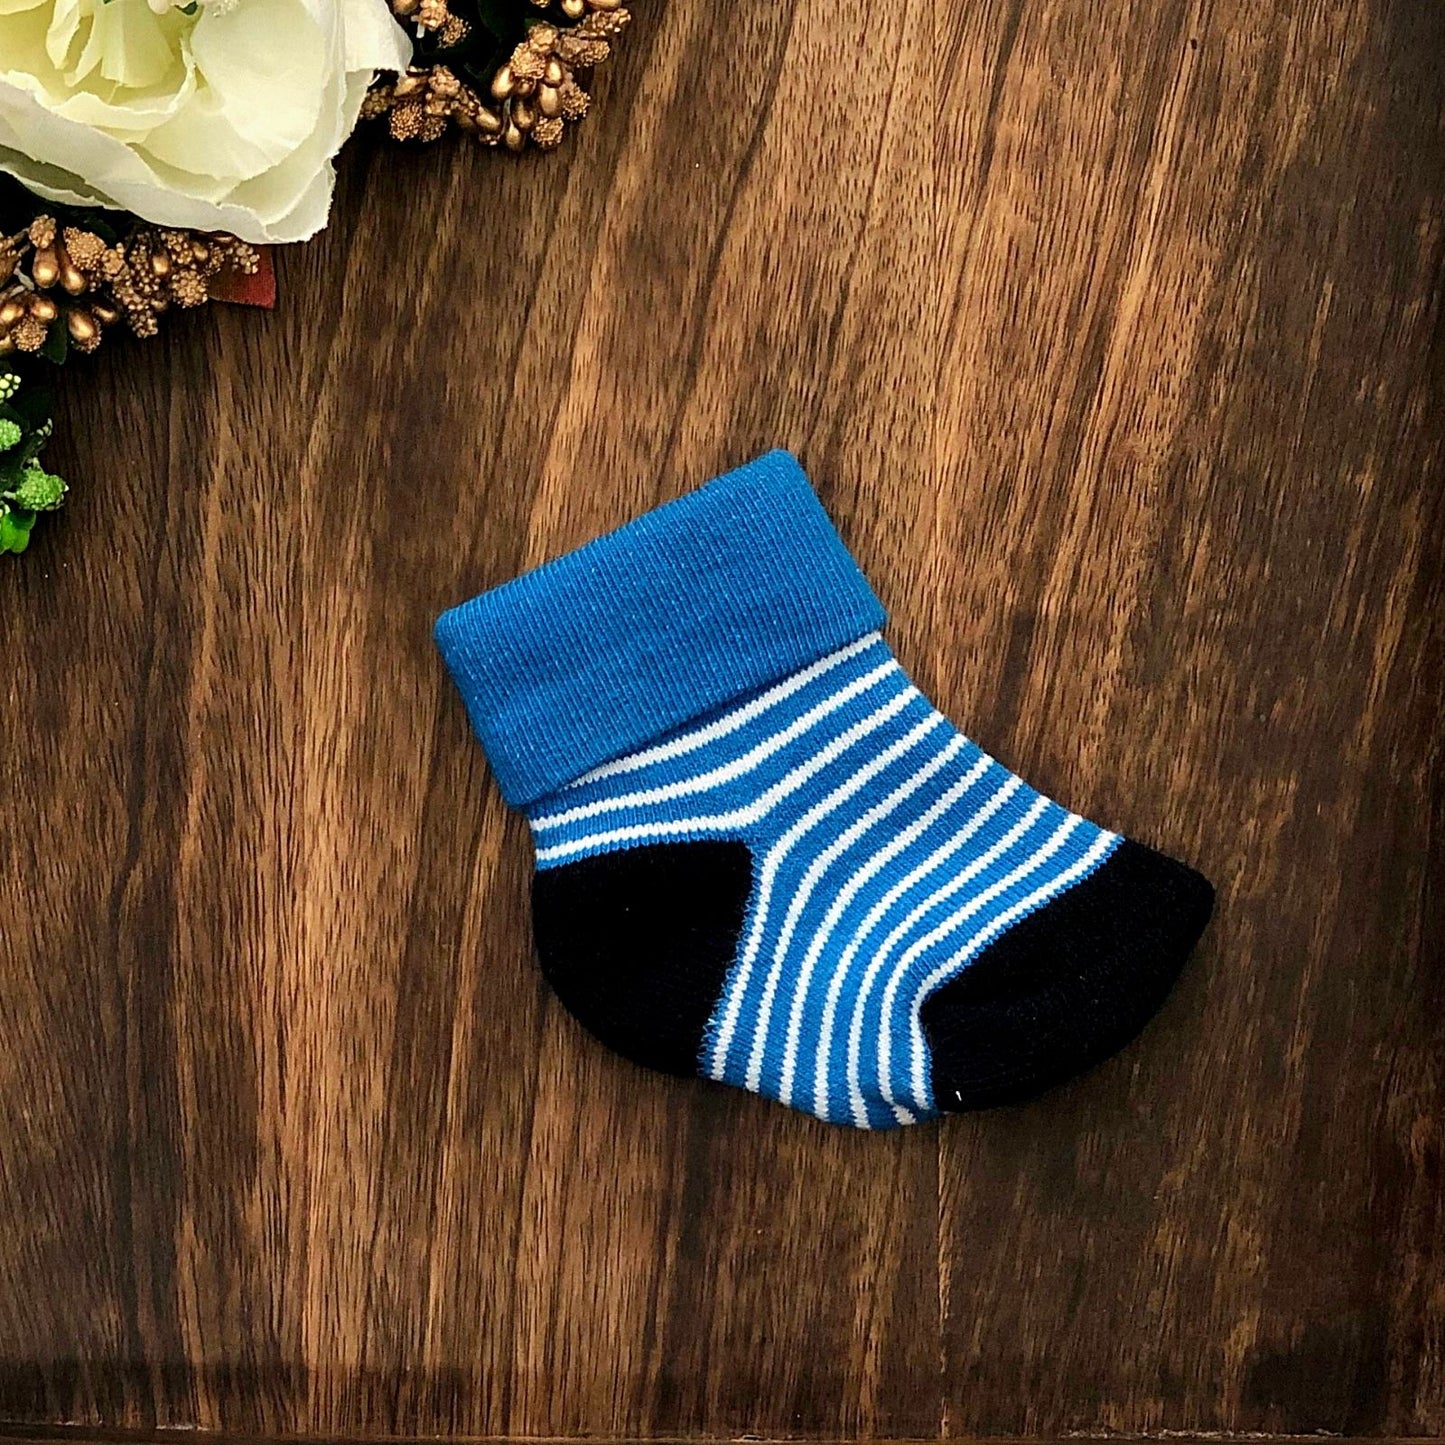 New Born Baby Cotton Terry Socks (Blue)